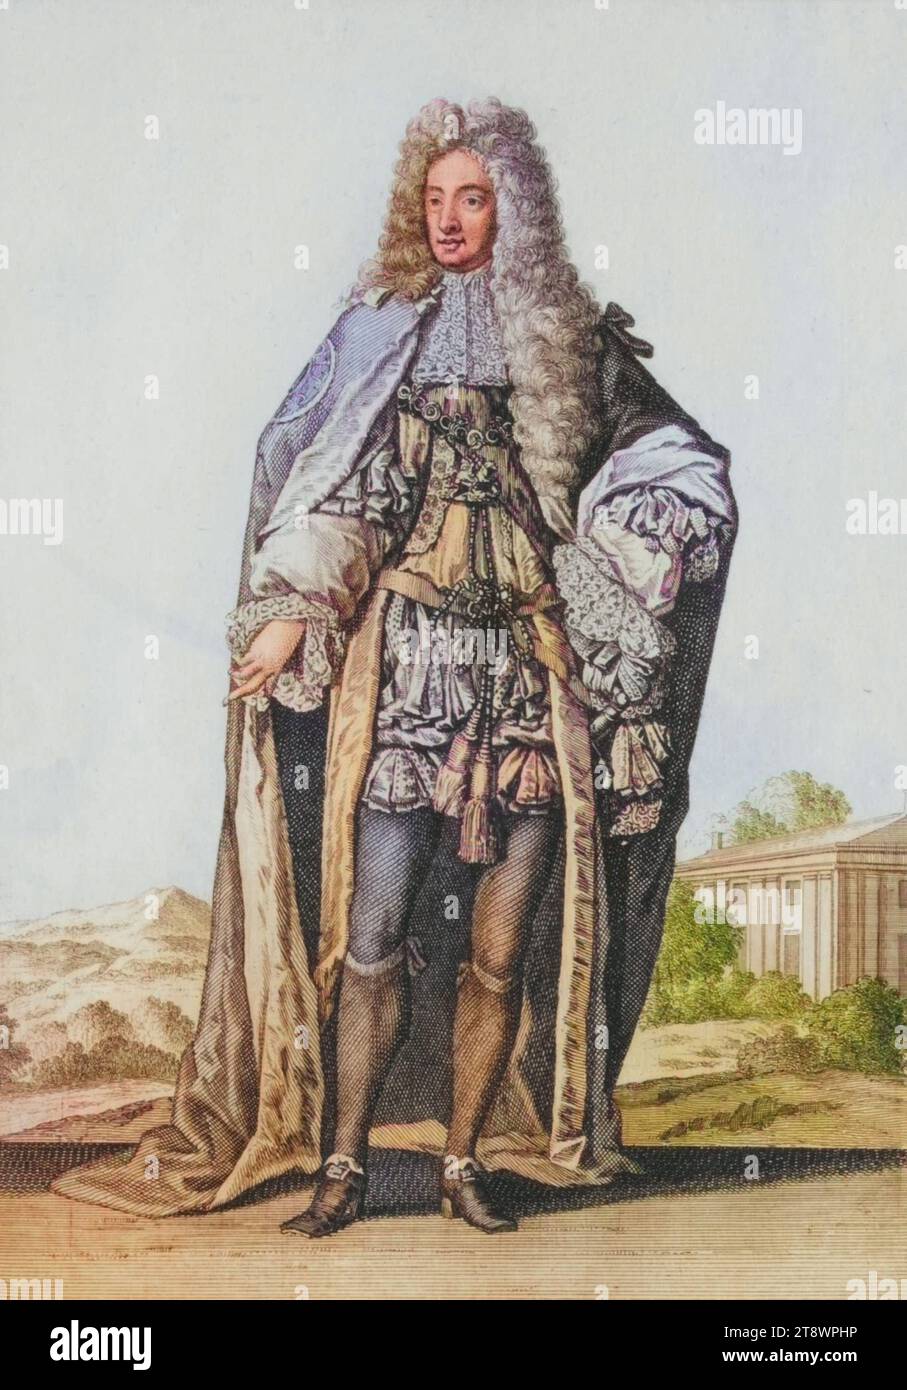 Tracht, Bekleidung, Georgius Pr. Daniae, Dux Cumbriae, Archithalaßus angliae, Georg, Prinz von Dänemark (1. mai 1653 bis 8. Novembre 1708) war der Ehemann der Königin Anne von Großbritannien, Kupferstich von Caspar Luyken von 1703, digital restaurierte Reproduktion von einer Vorlage aus dem 18. Jahrhundert / Costume, vêtements, Georgius Pr. Daniae, Dux Cumbriae, Archithalassus angliae, George, prince de Danemark (1 mai 1653 au 8 novembre 1708) était l'époux de la reine Anne de Grande-Bretagne, gravure sur cuivre par Caspar Luyken de 1703, reproduction restaurée numériquement d'un siècle o 18 Banque D'Images